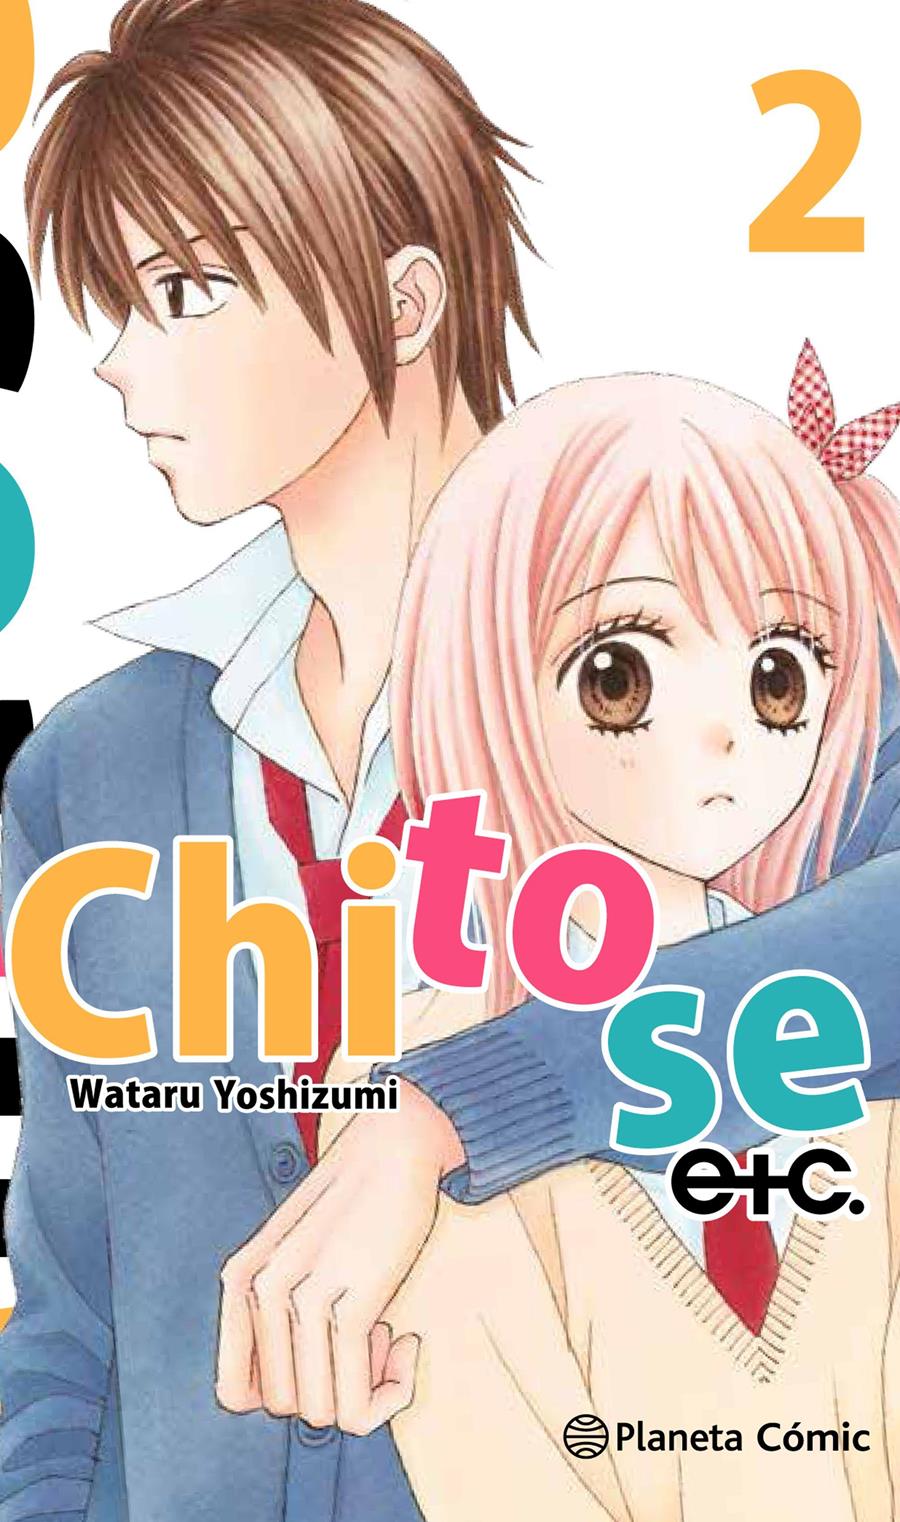 Chitose Etc nº 02/07 | N0717-PLA04 | Wataru Yoshizumi | Terra de Còmic - Tu tienda de cómics online especializada en cómics, manga y merchandising